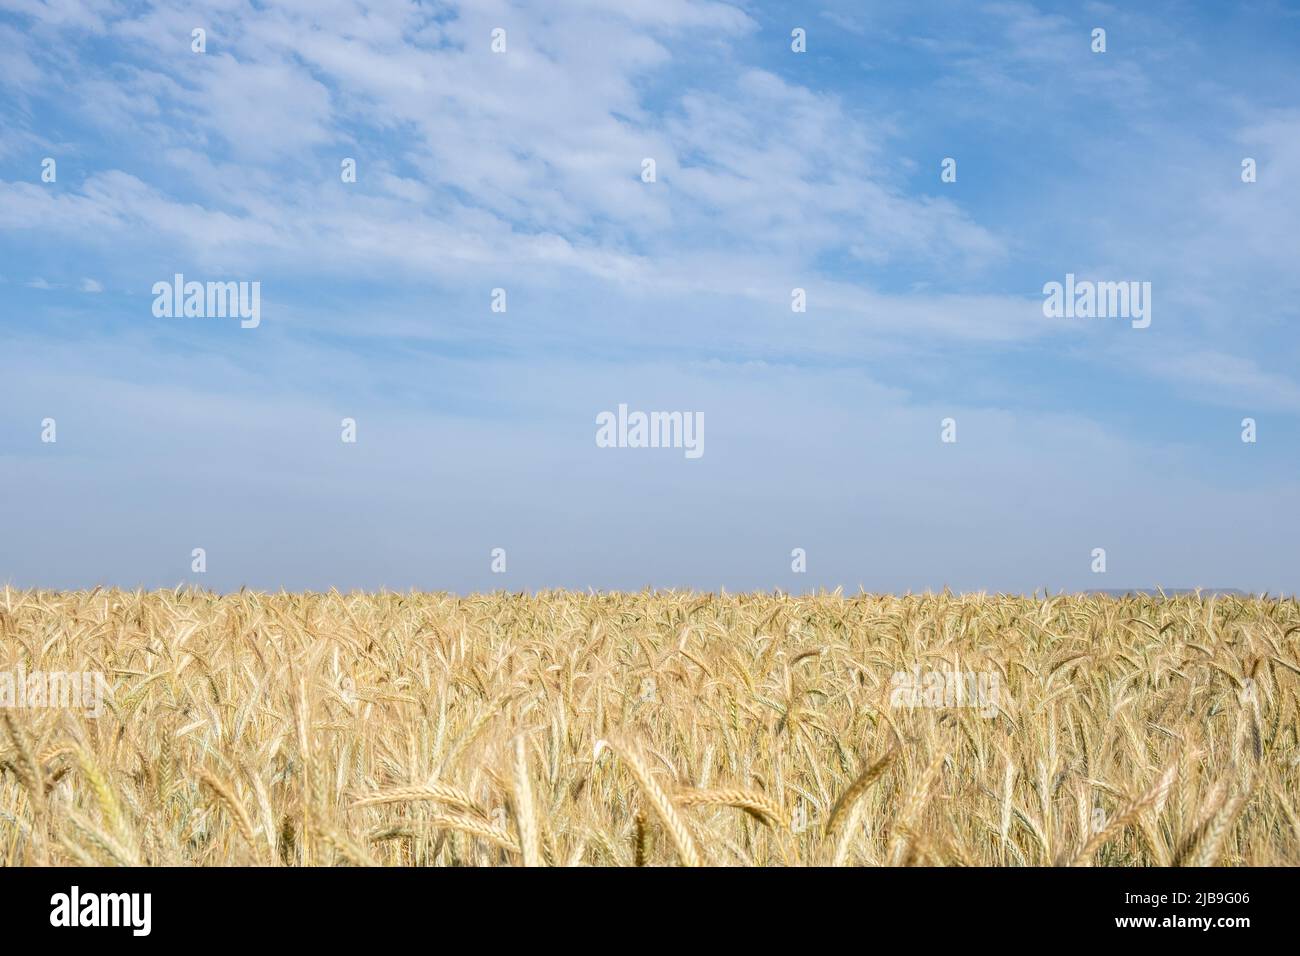 Golden wheat field ready for harvesting. Rural grain field farmland against cloud sky Stock Photo